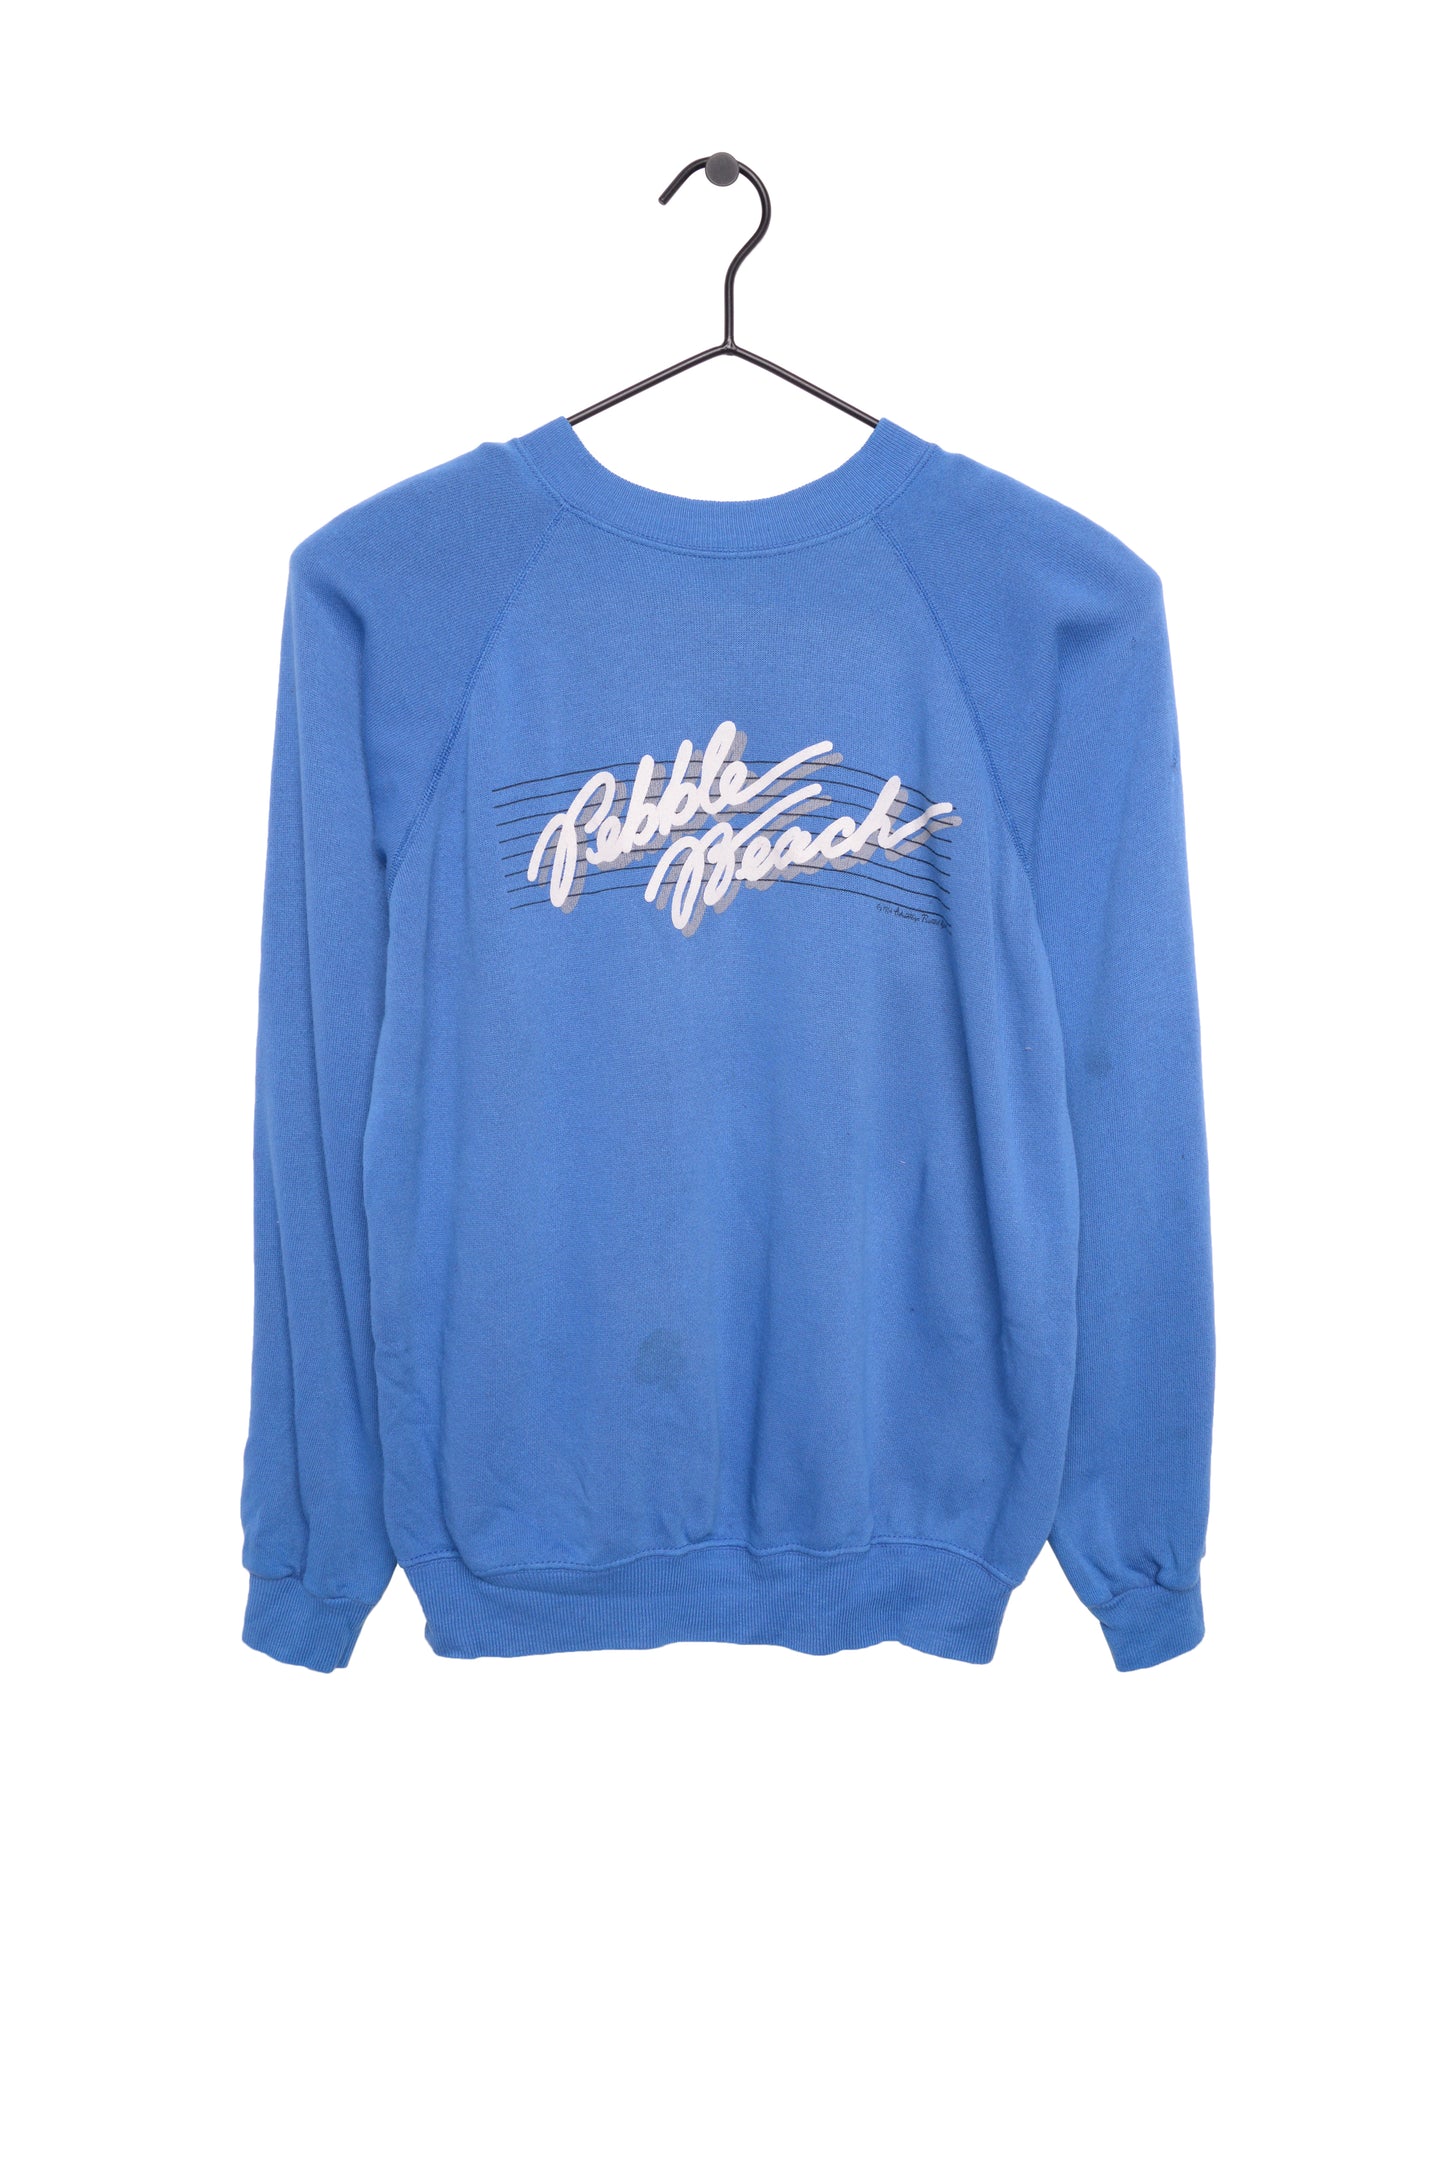 1984 Pebble Beach Sweatshirt USA